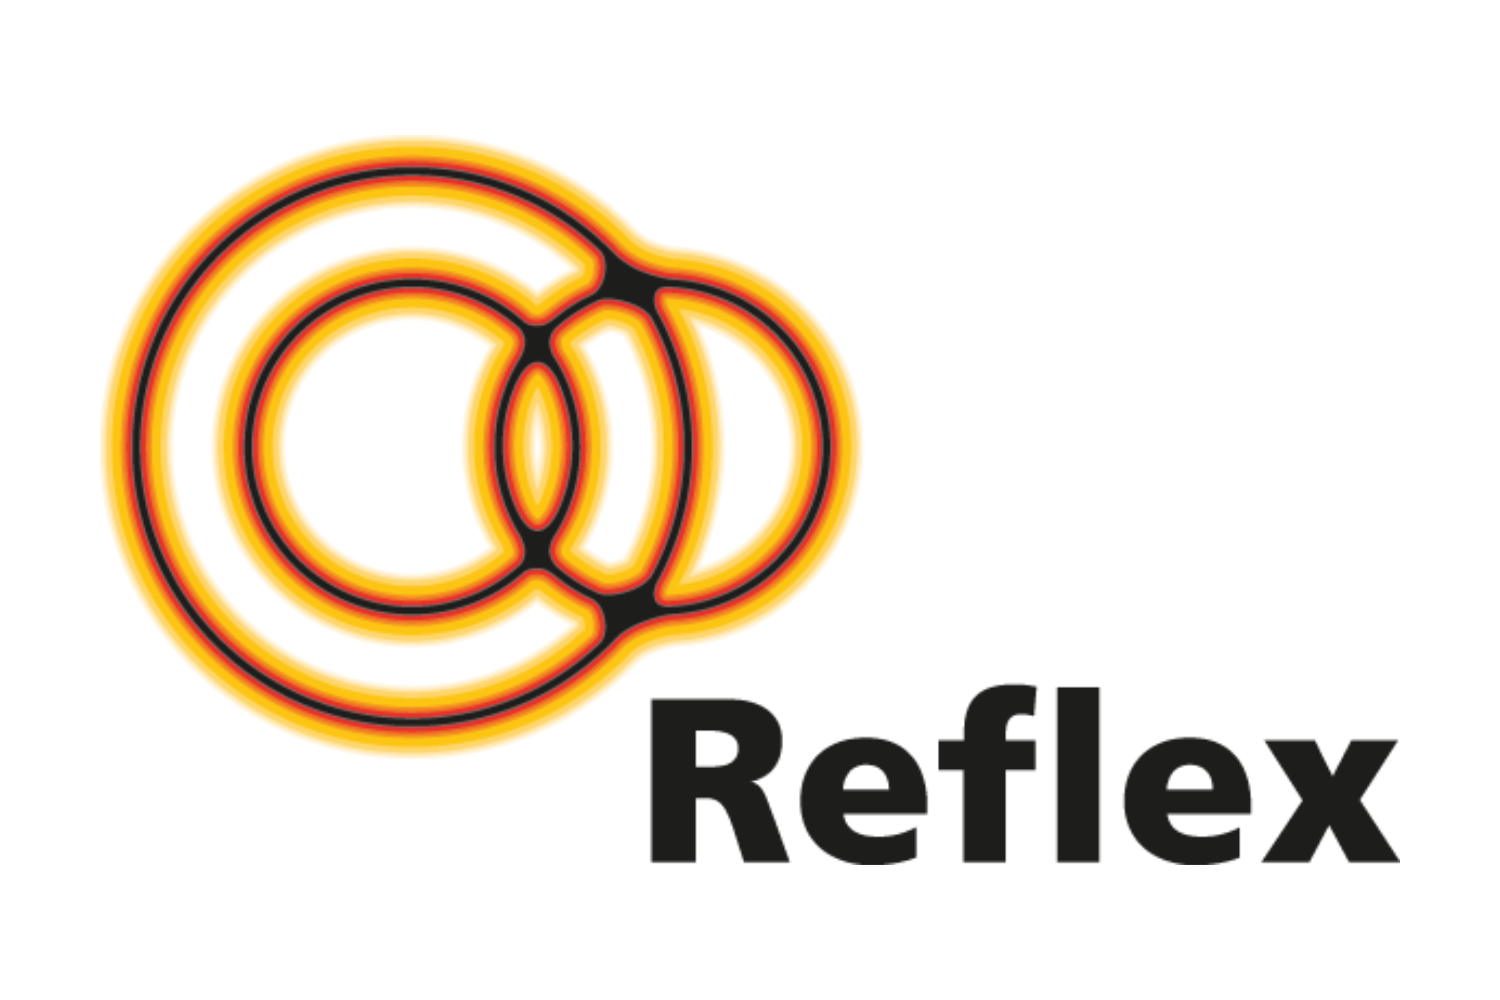 Reflex Systems Limited